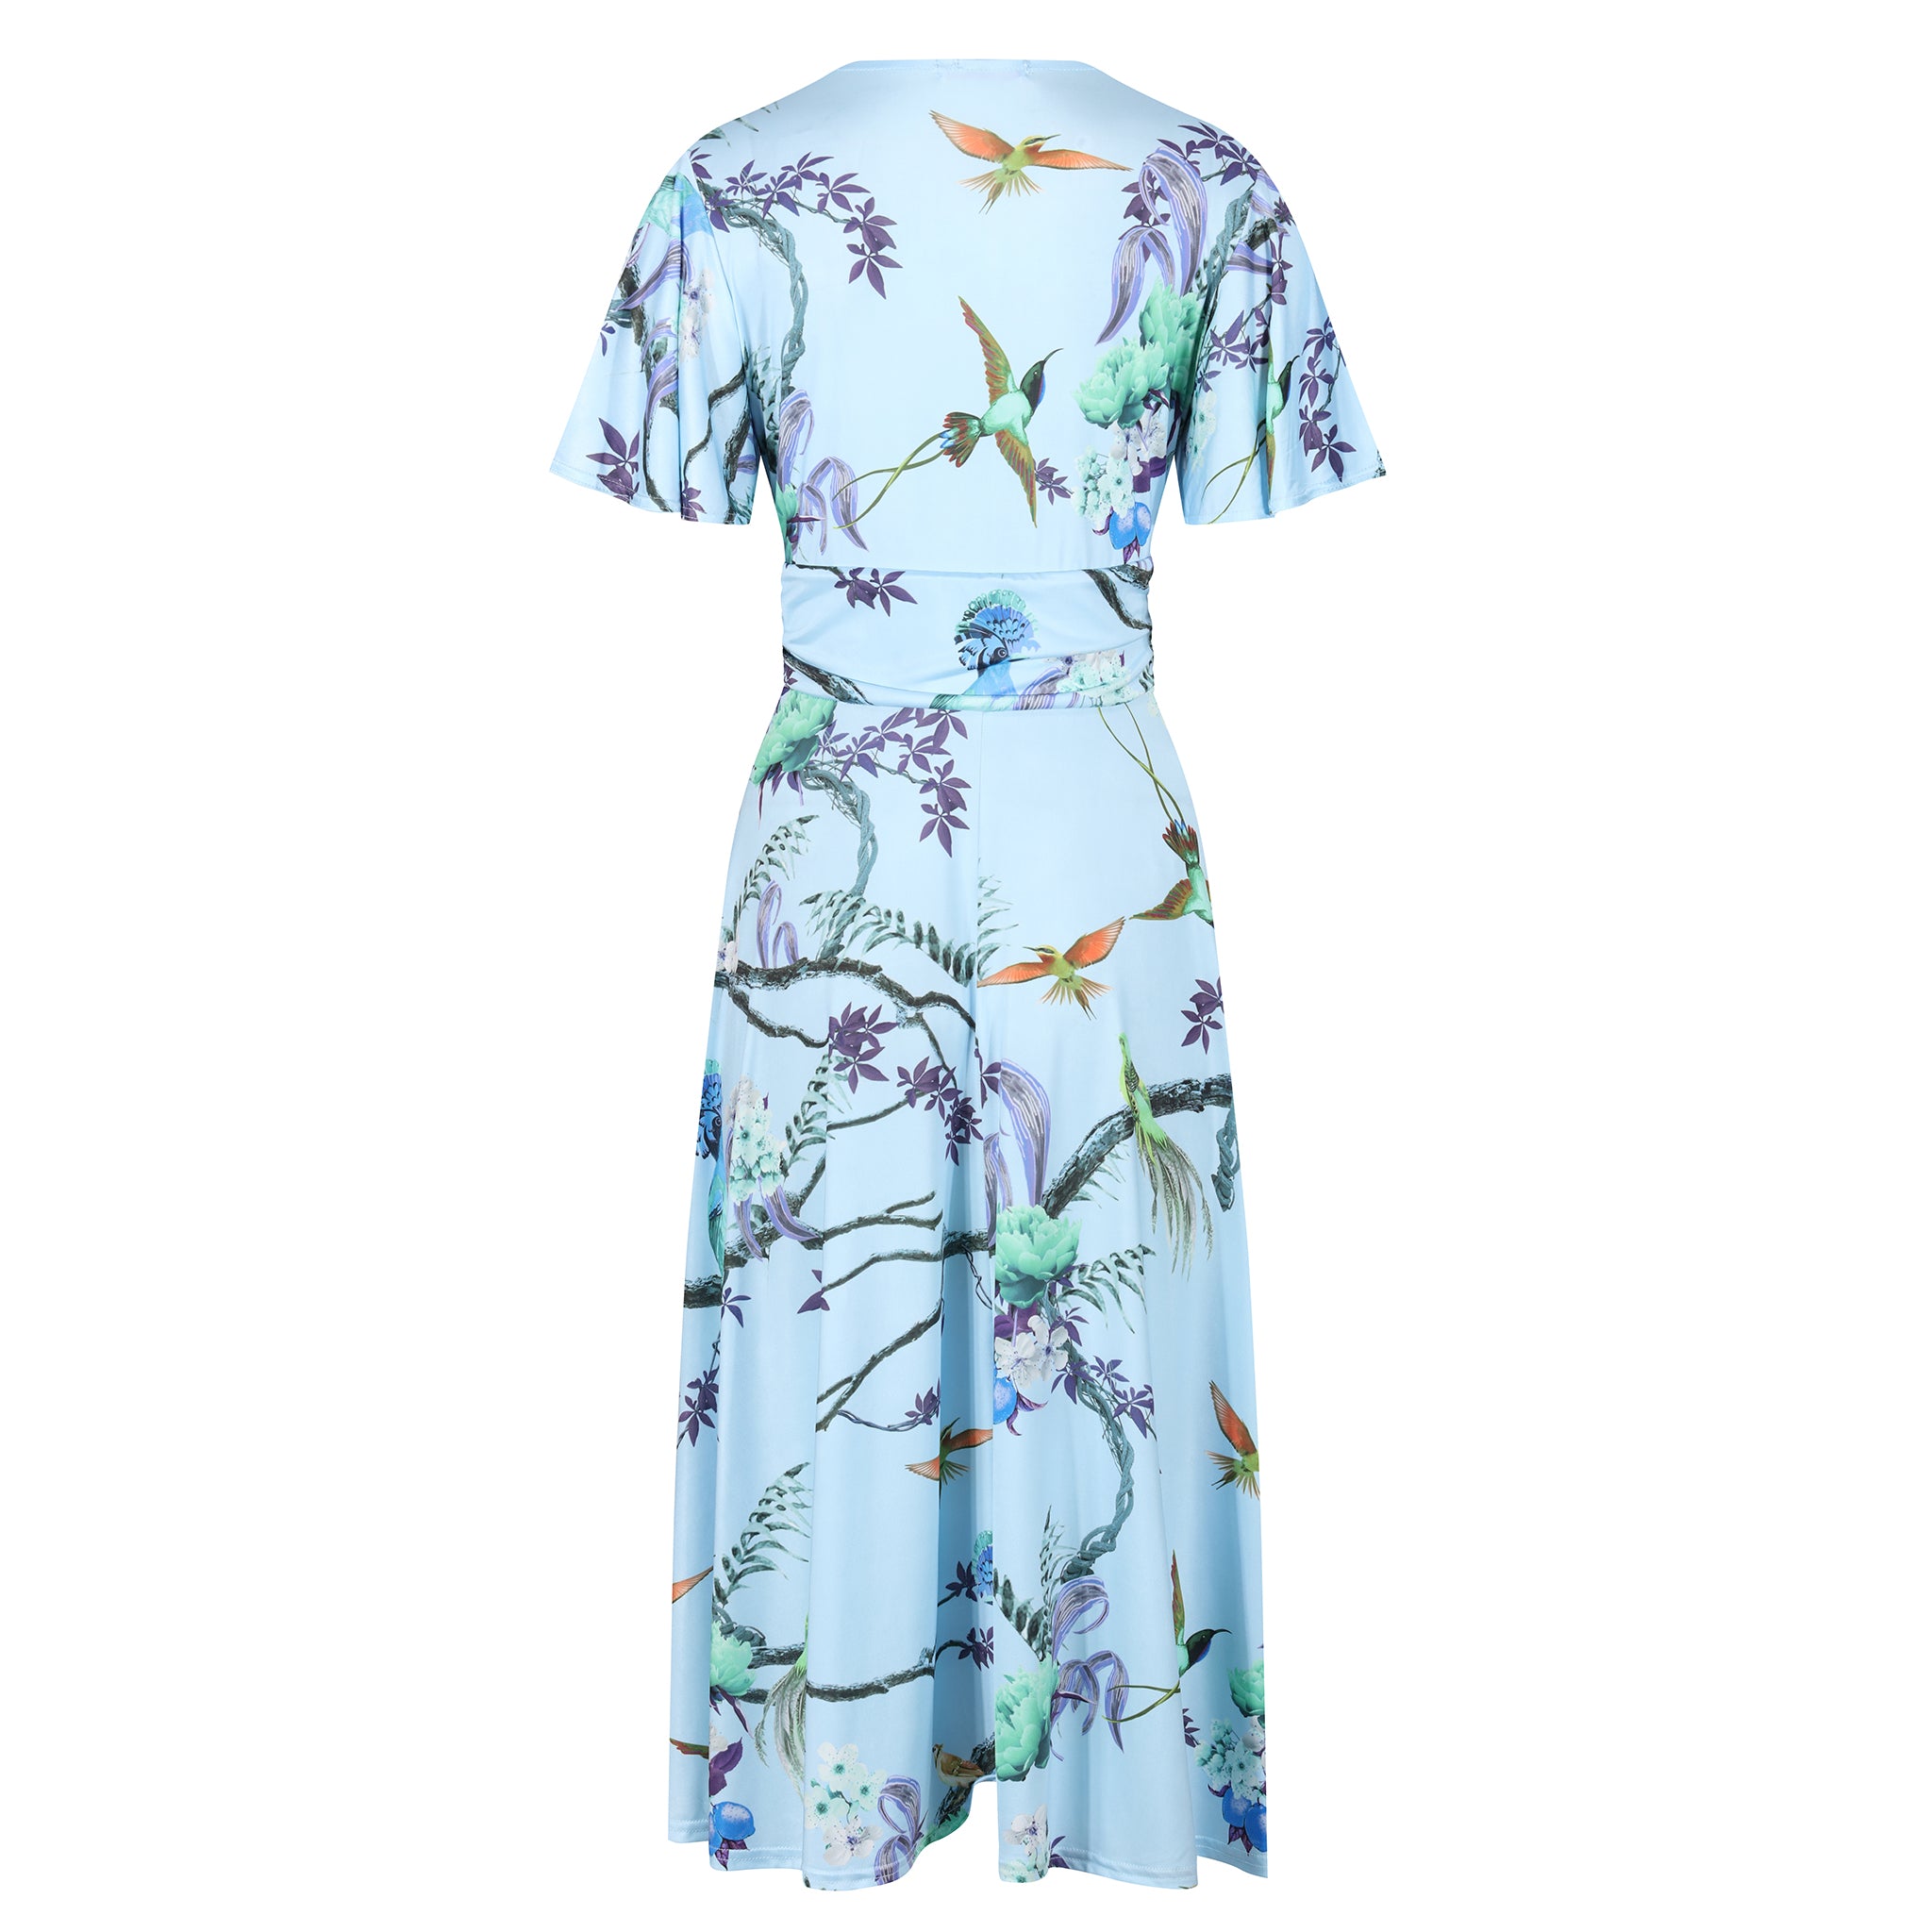 Blue Floral Bird Print Cap Sleeve V Neck Wrap Top Swing Dress